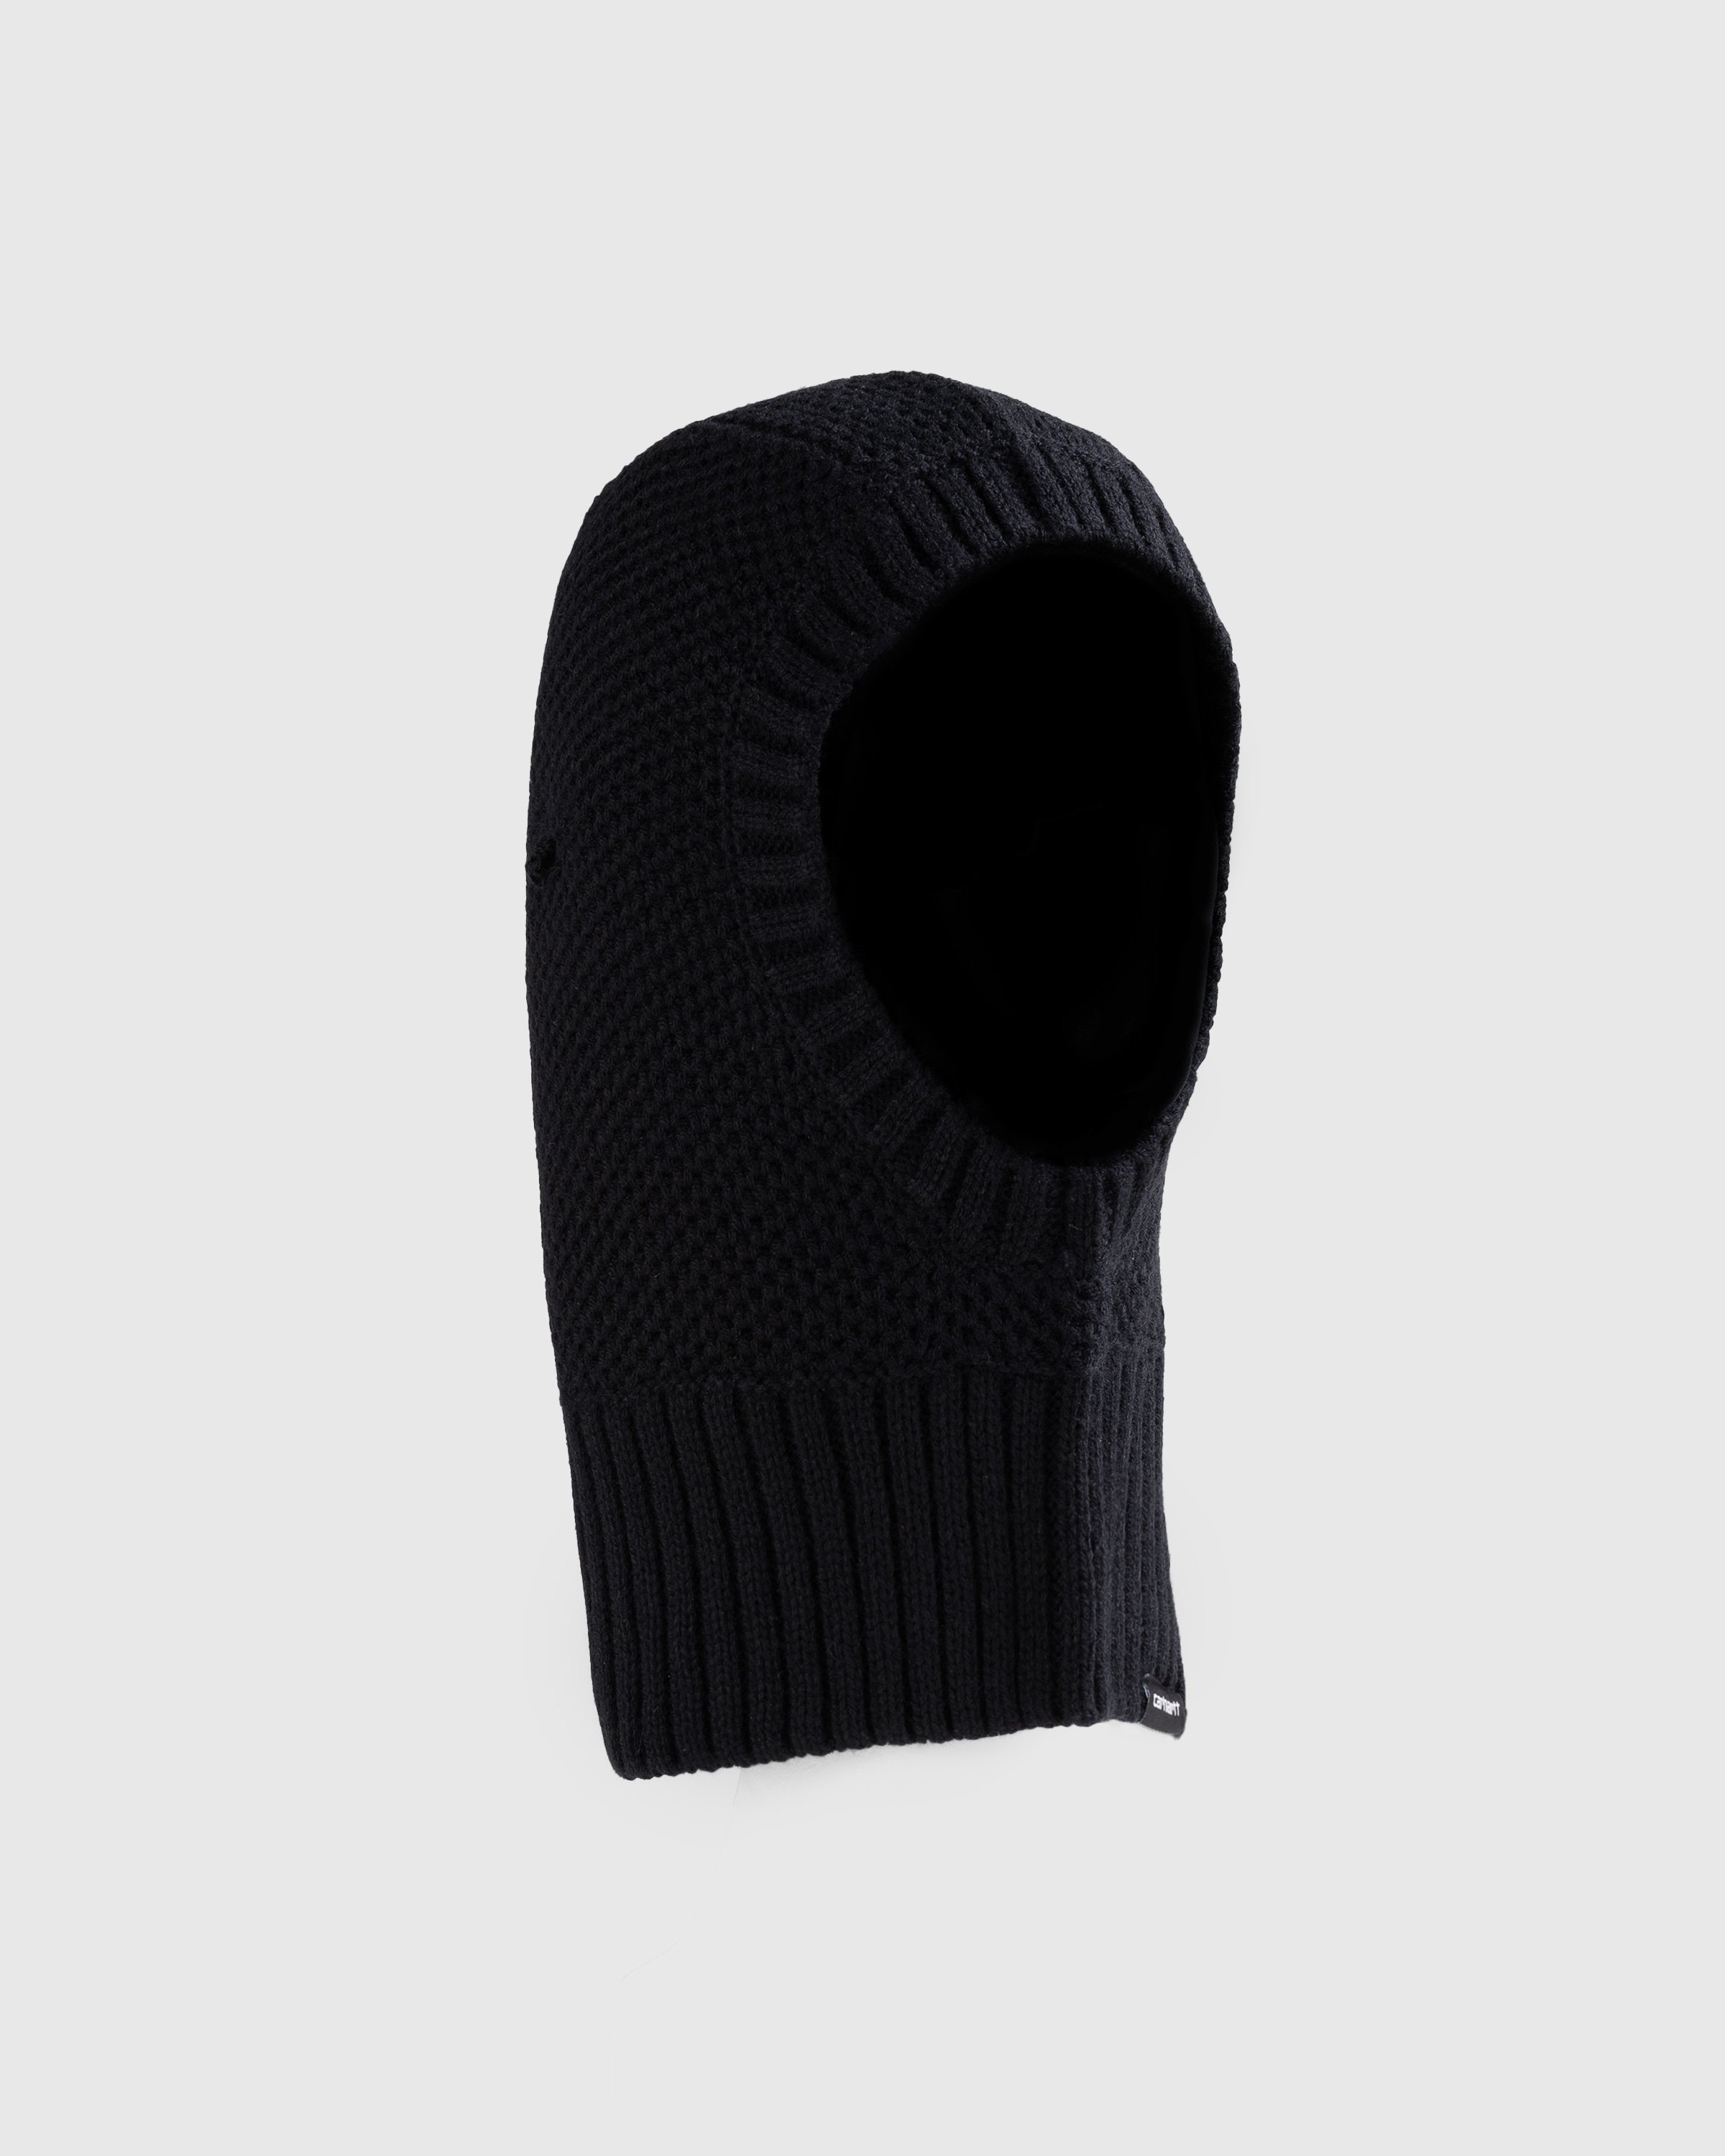 Carhartt WIP - Remi Hood Black - Accessories - Black - Image 3